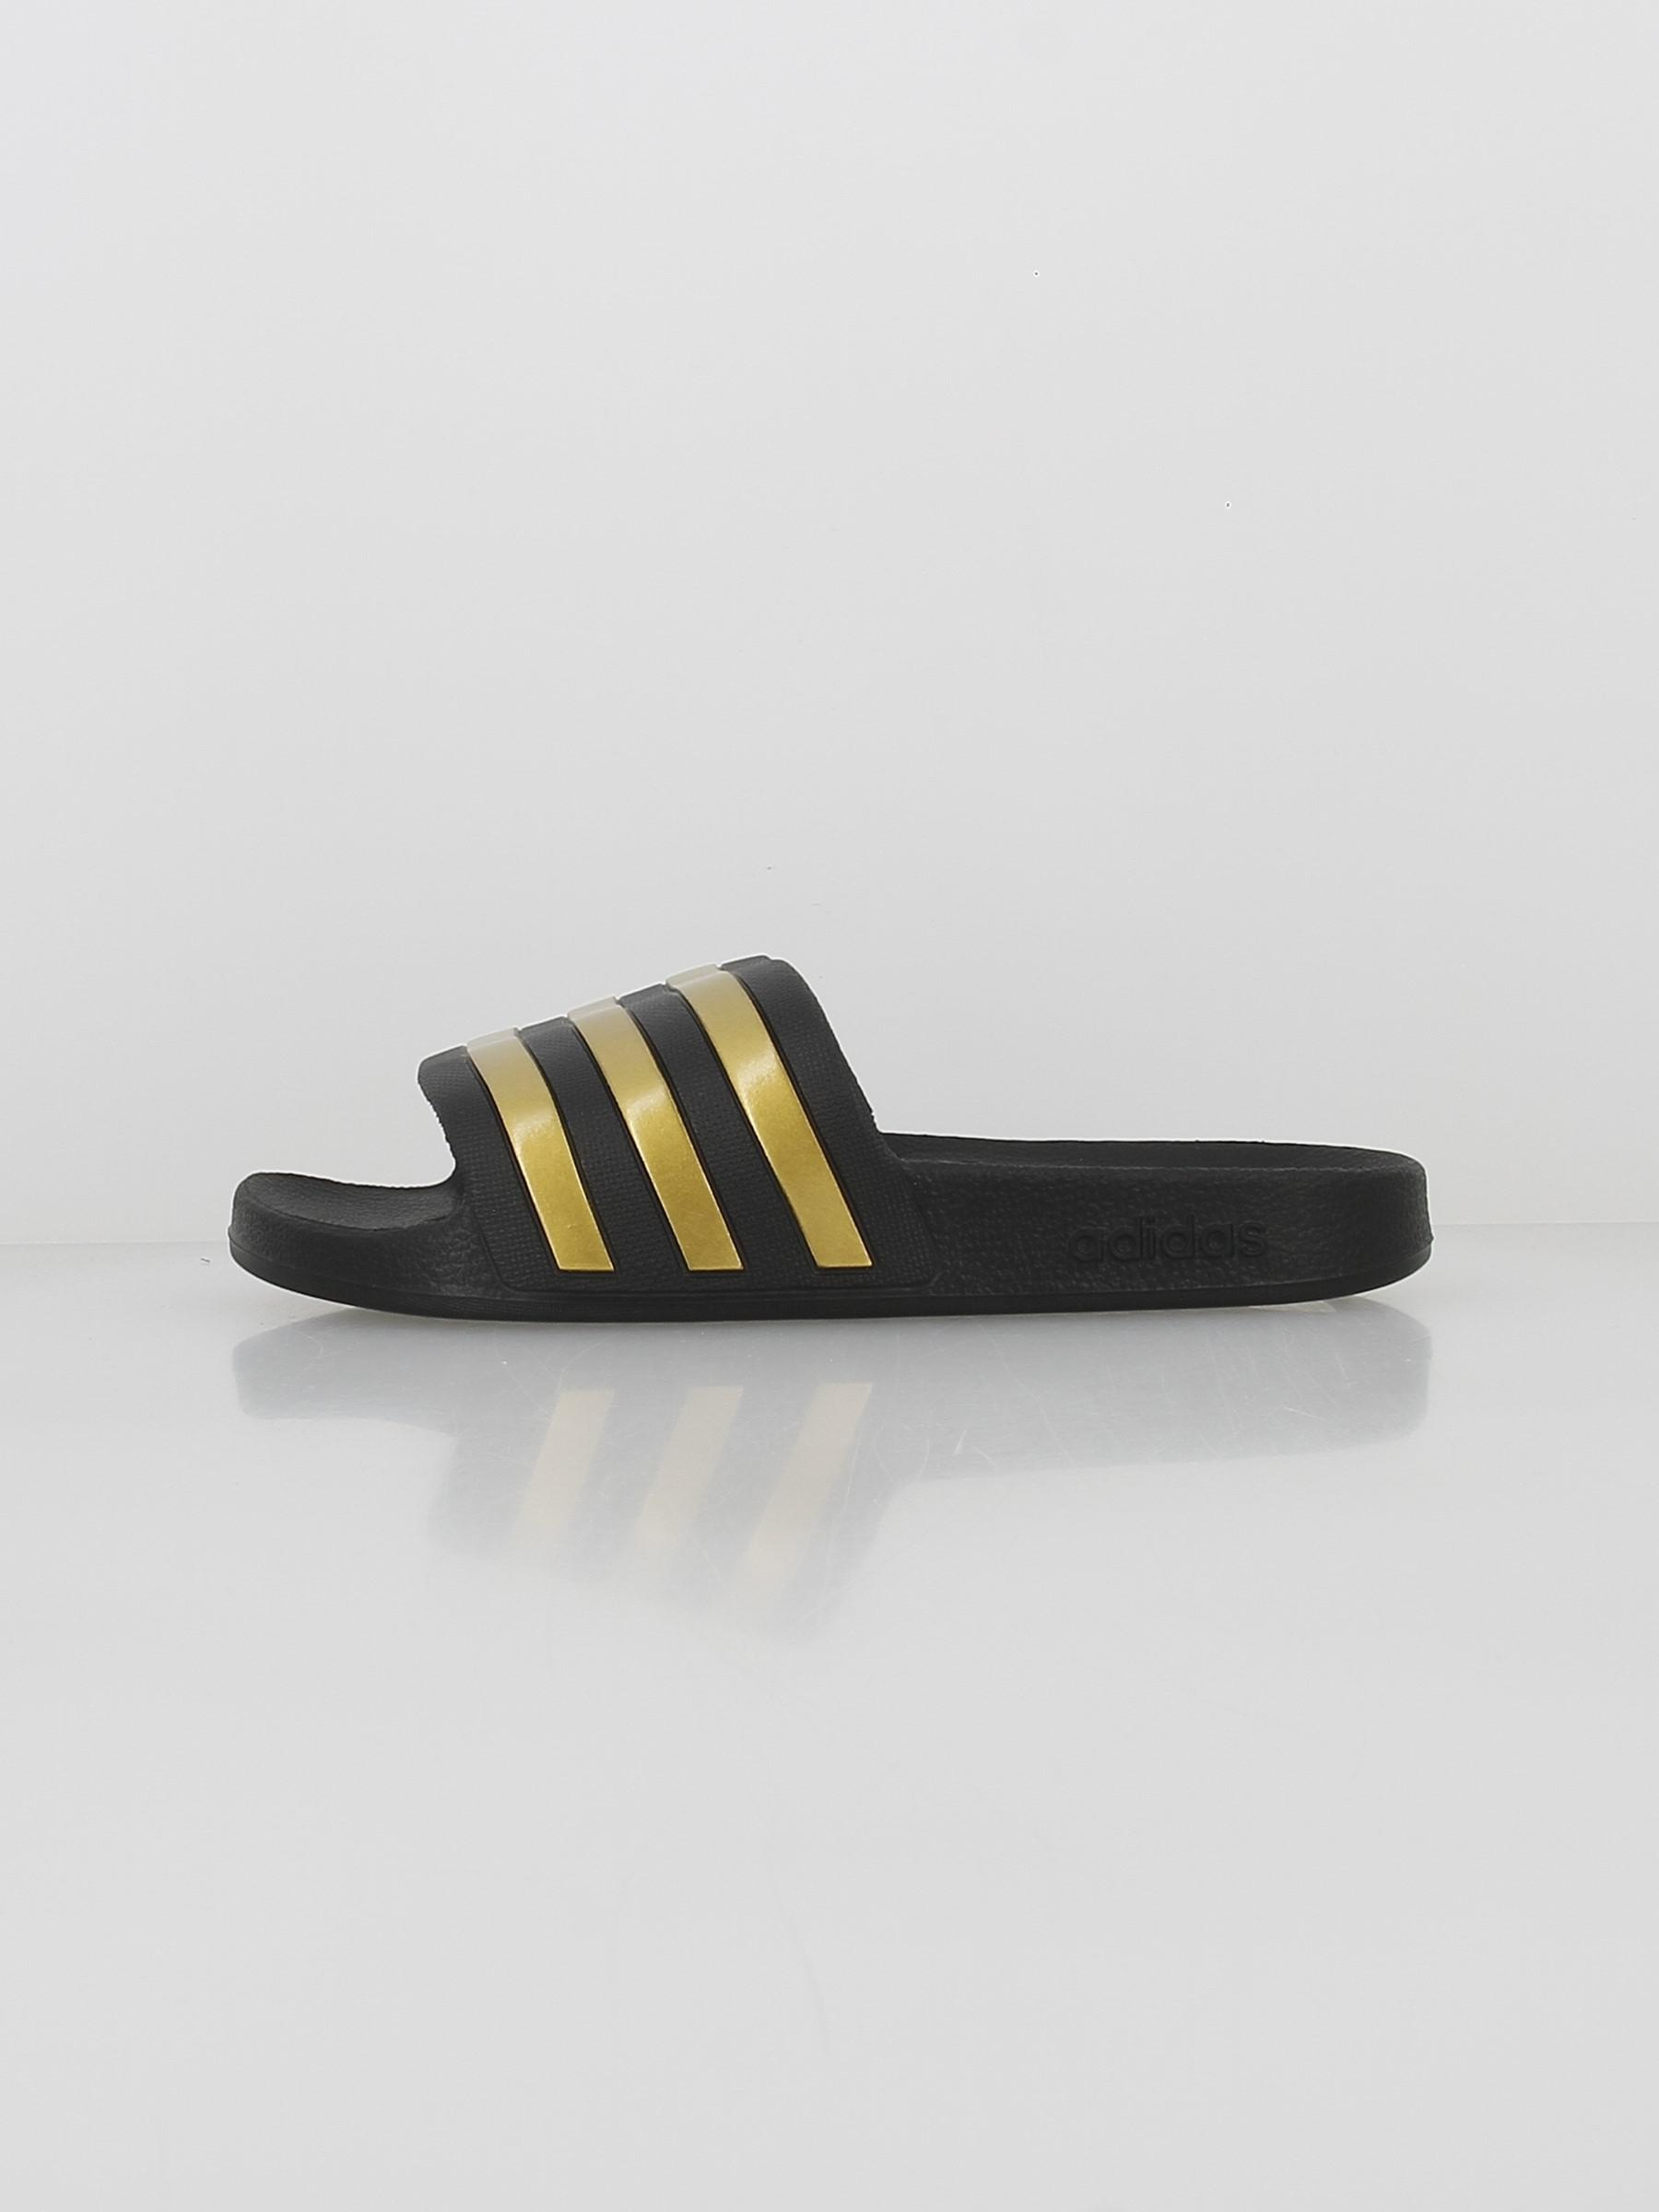 Claquettes adilette aqua noir doré - Adidas